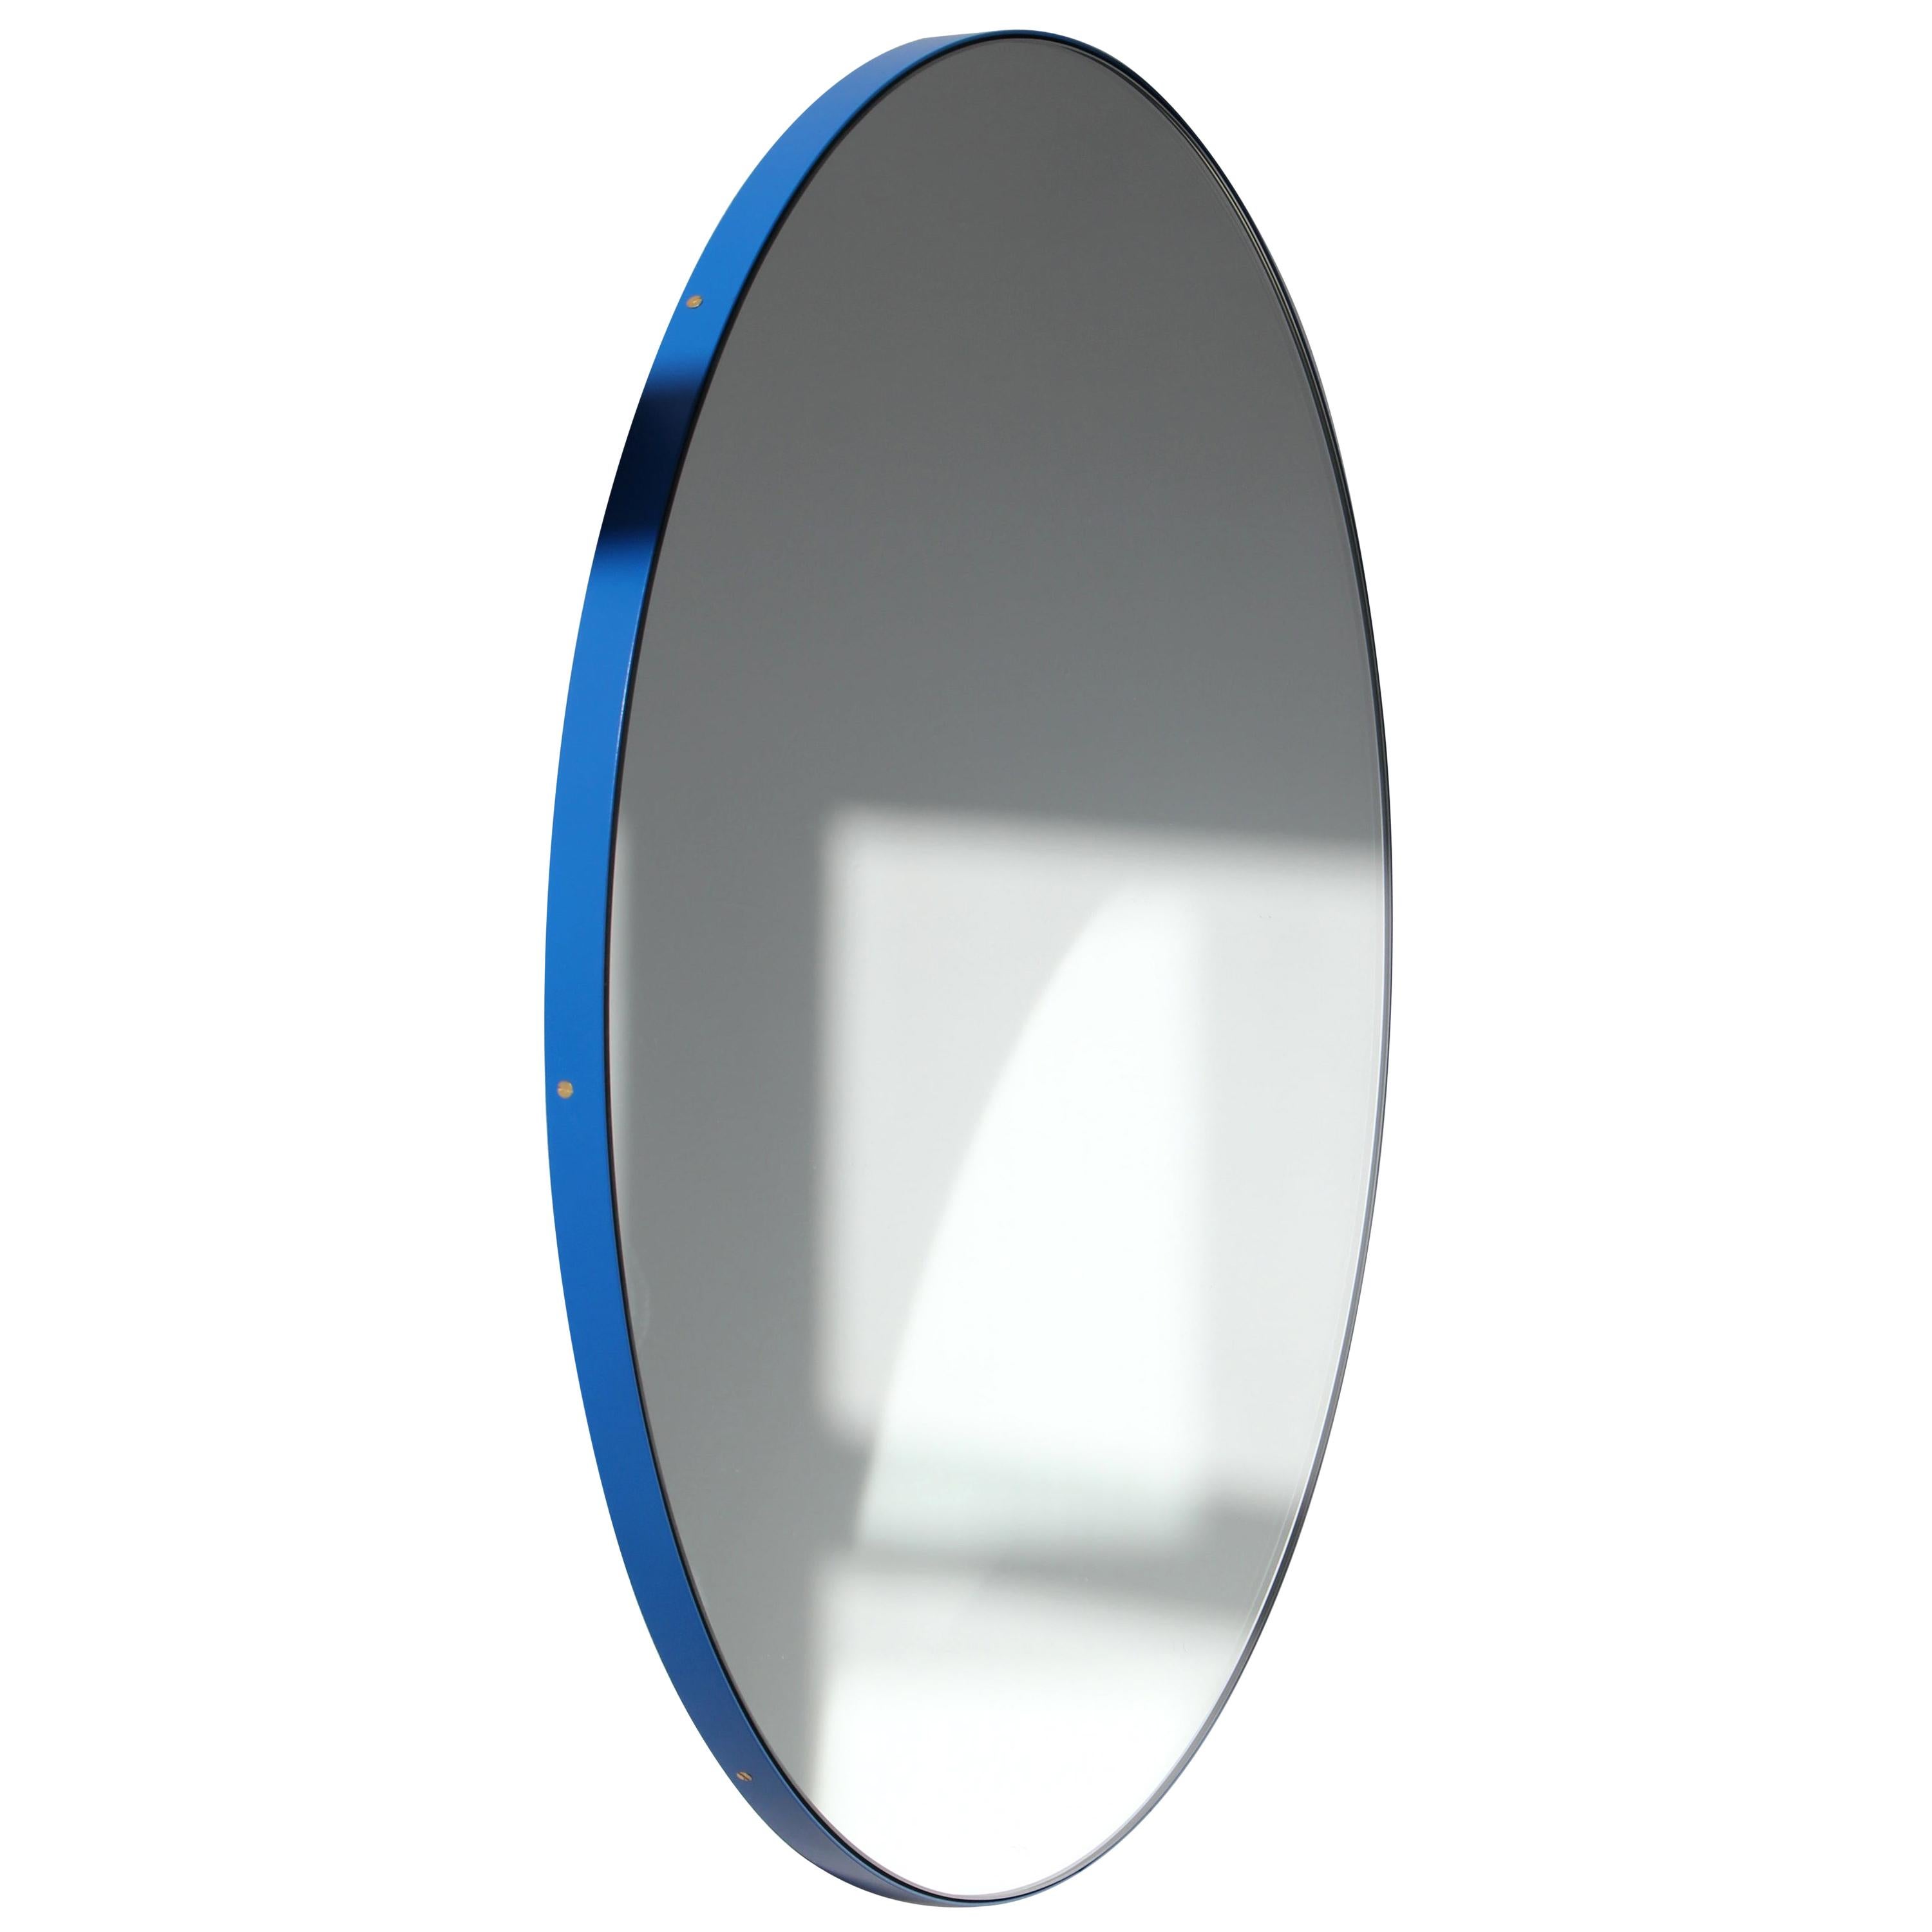 Orbis Round Contemporary Mirror with Blue Frame - Regular